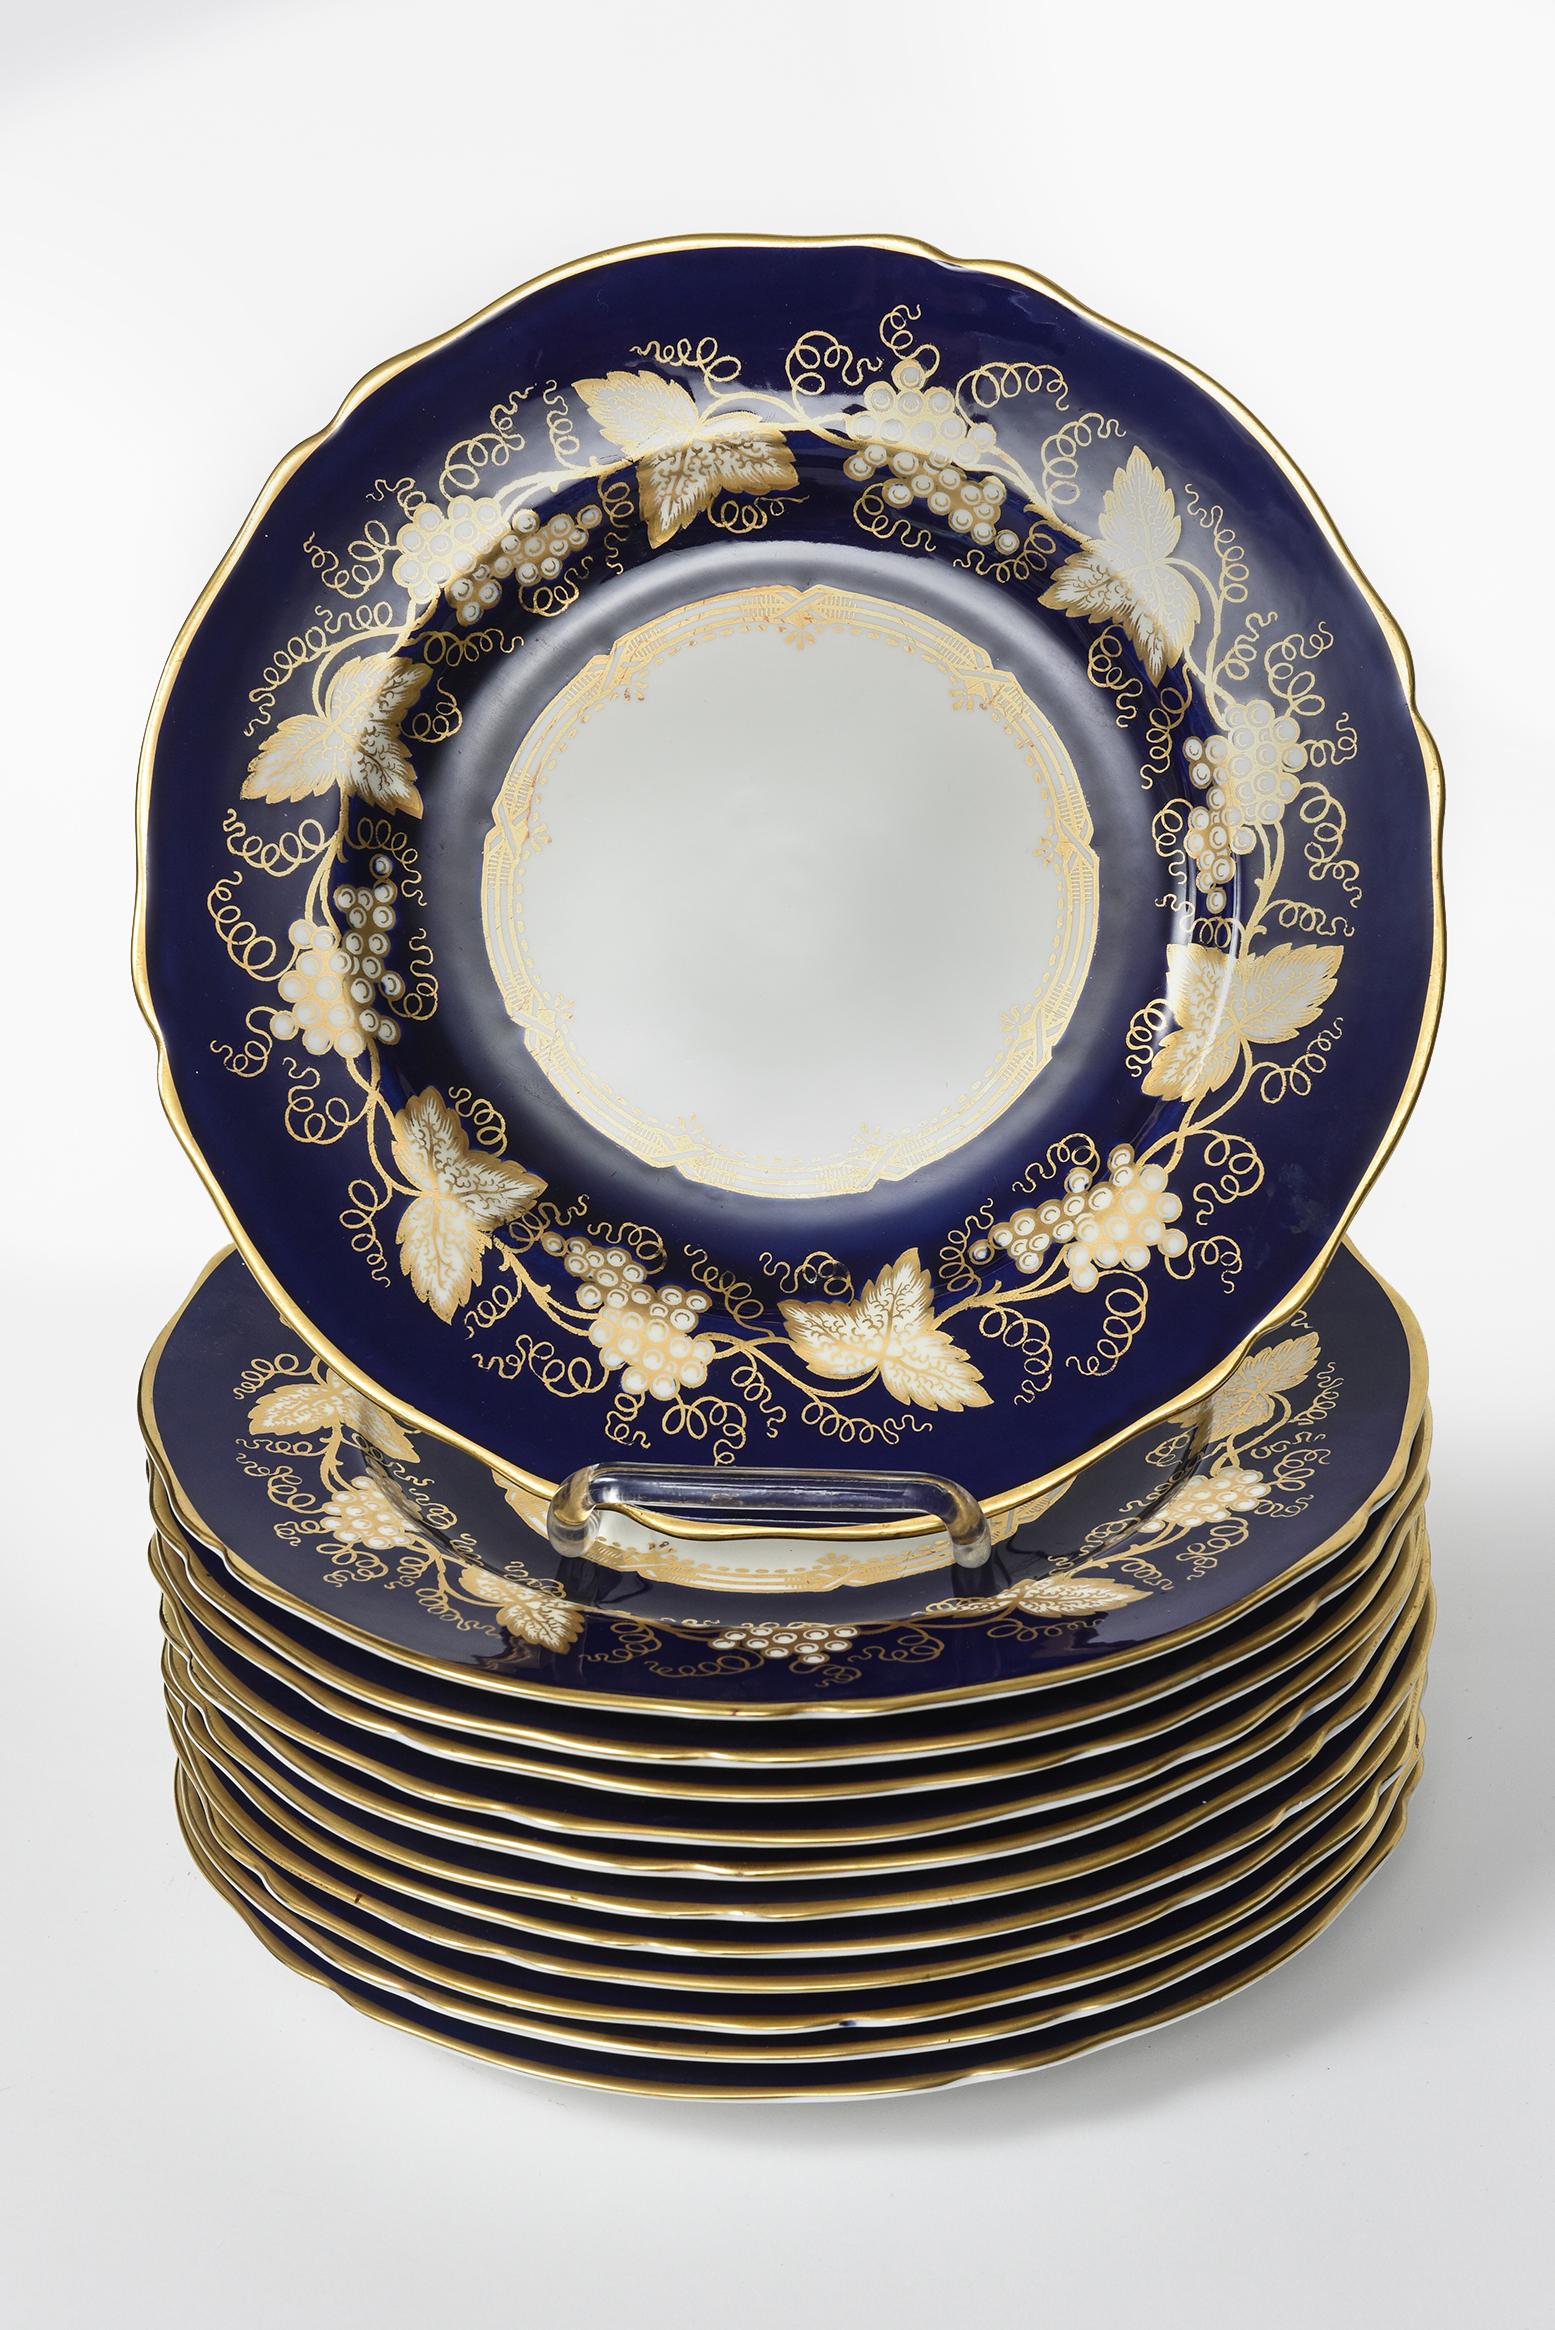 Elegant set of 12 dinner plates designed by Copeland Spode. These elegant 10.5